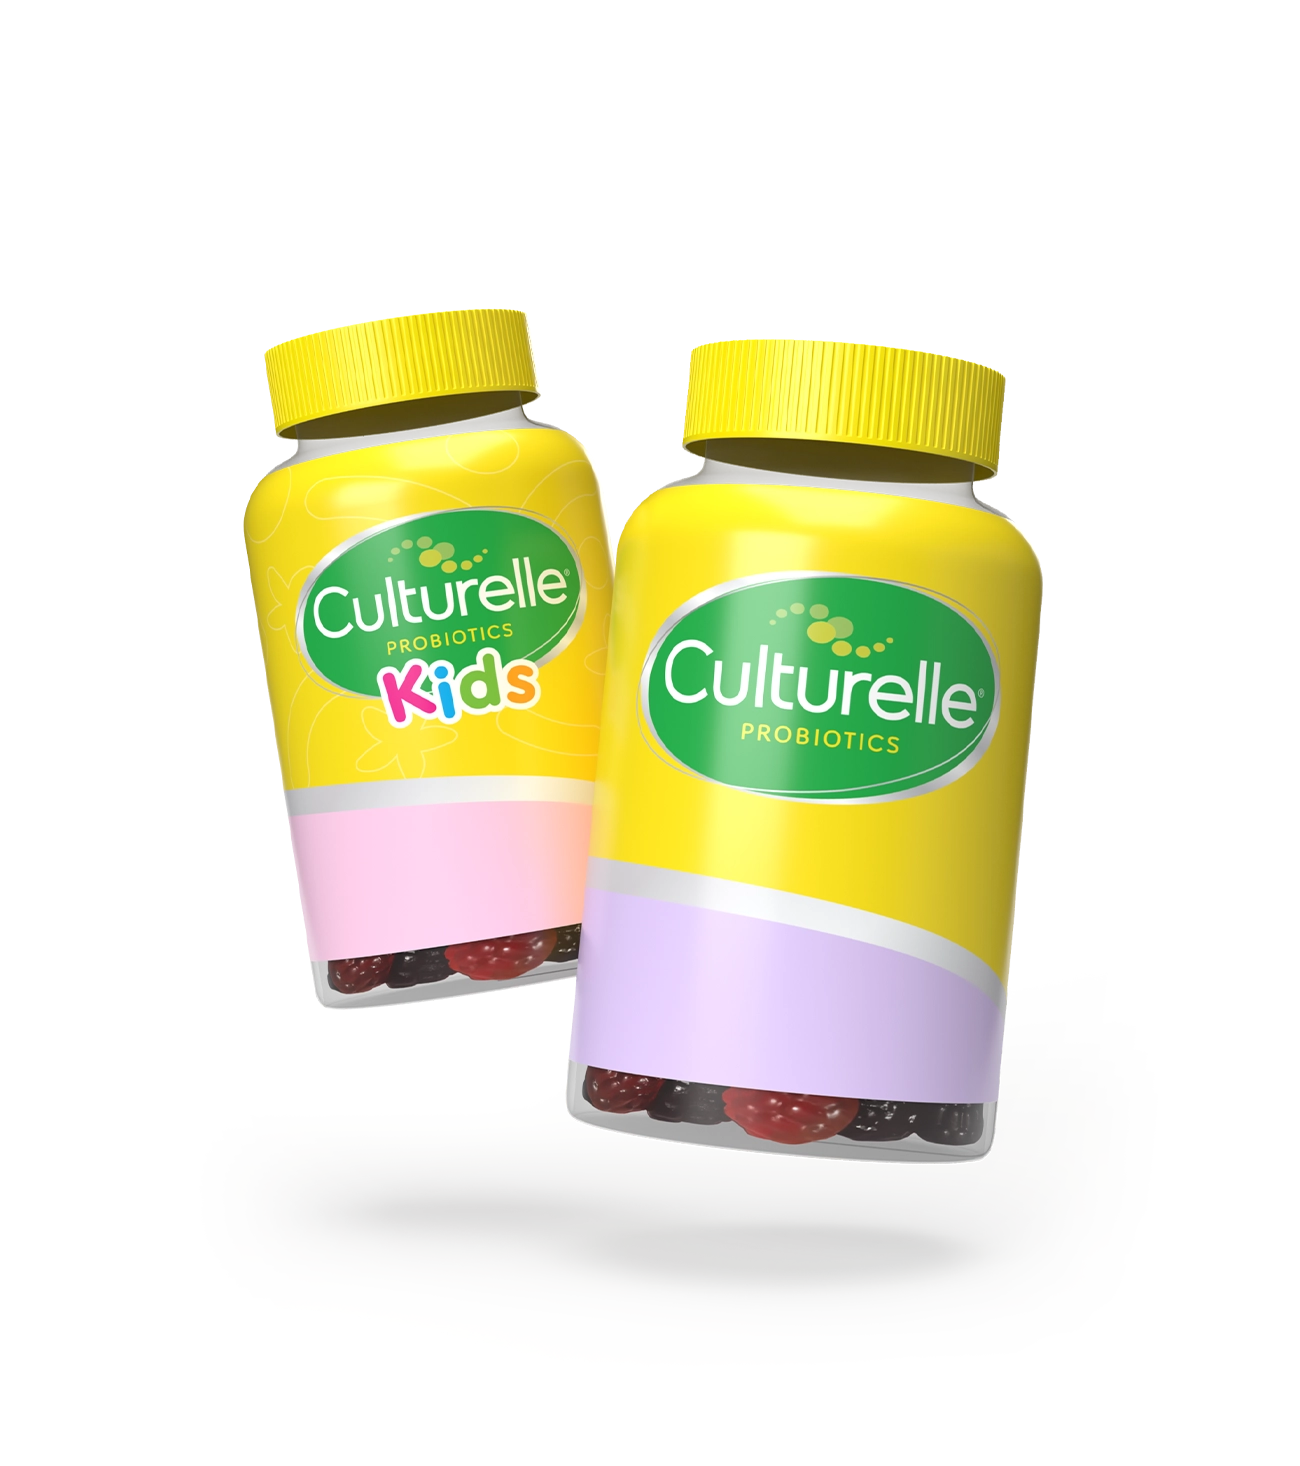 Culturelle adult and kids gummies bottles